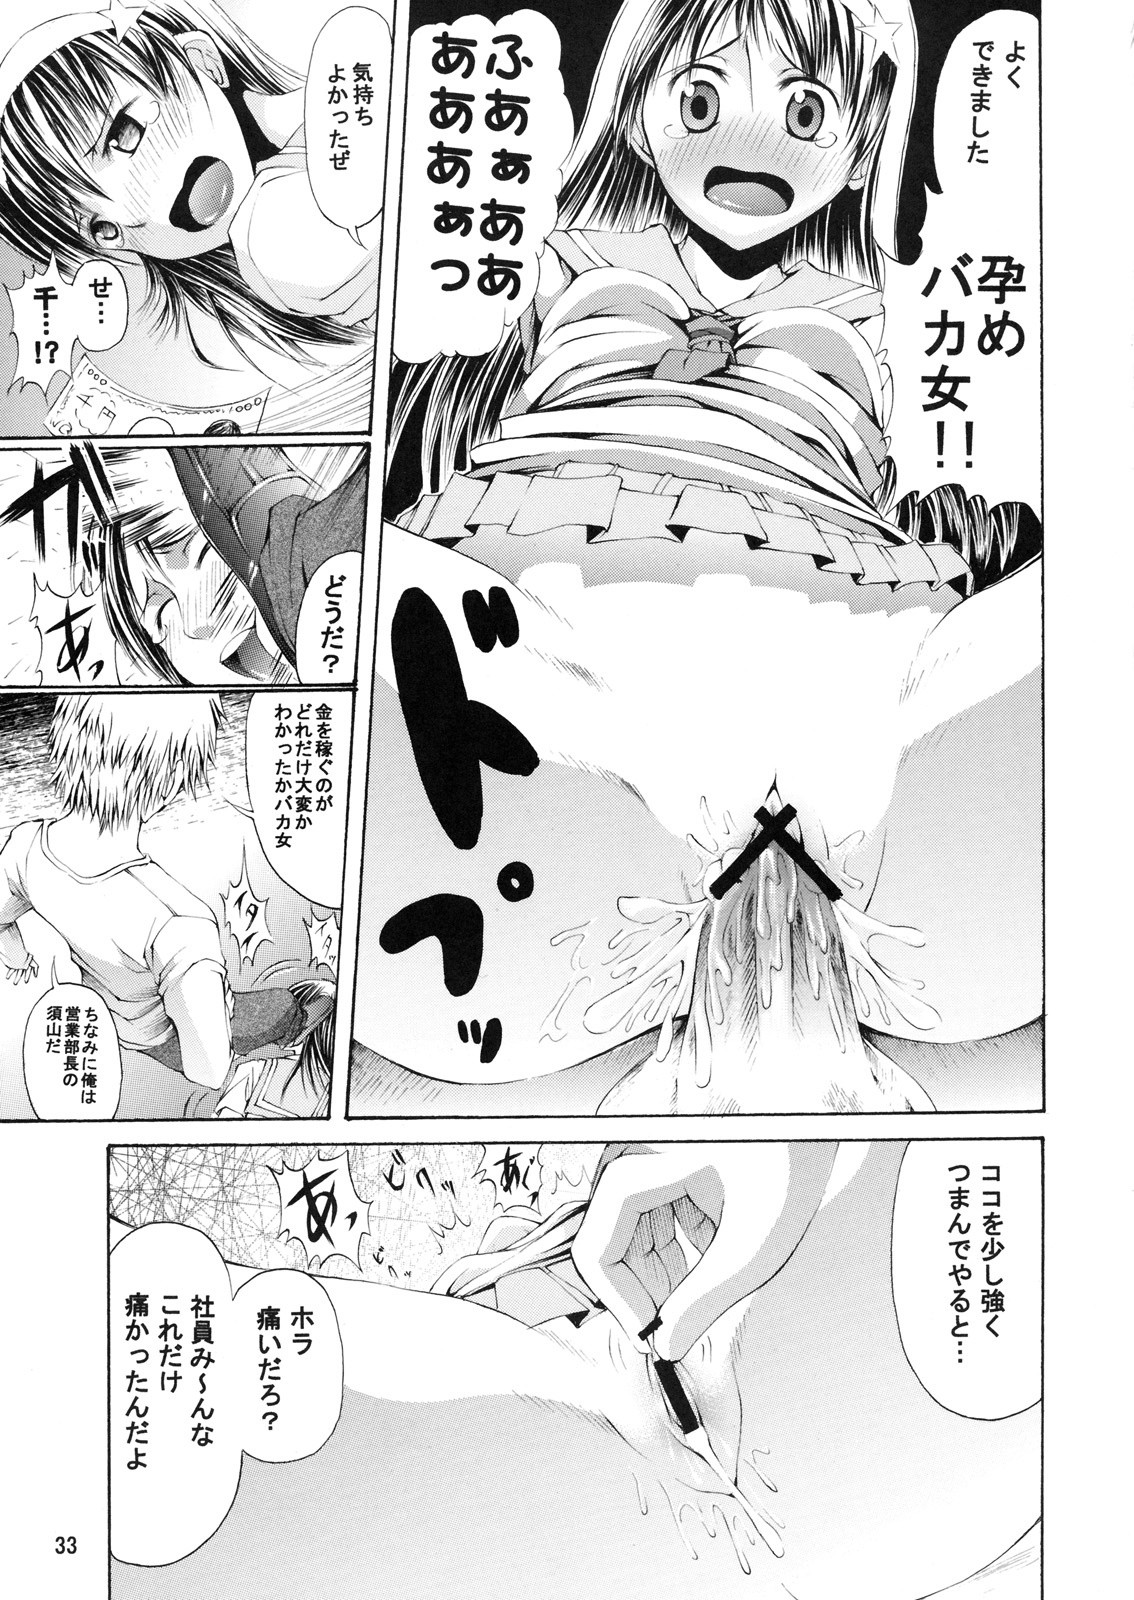 DOF Mai hentai manga picture 28